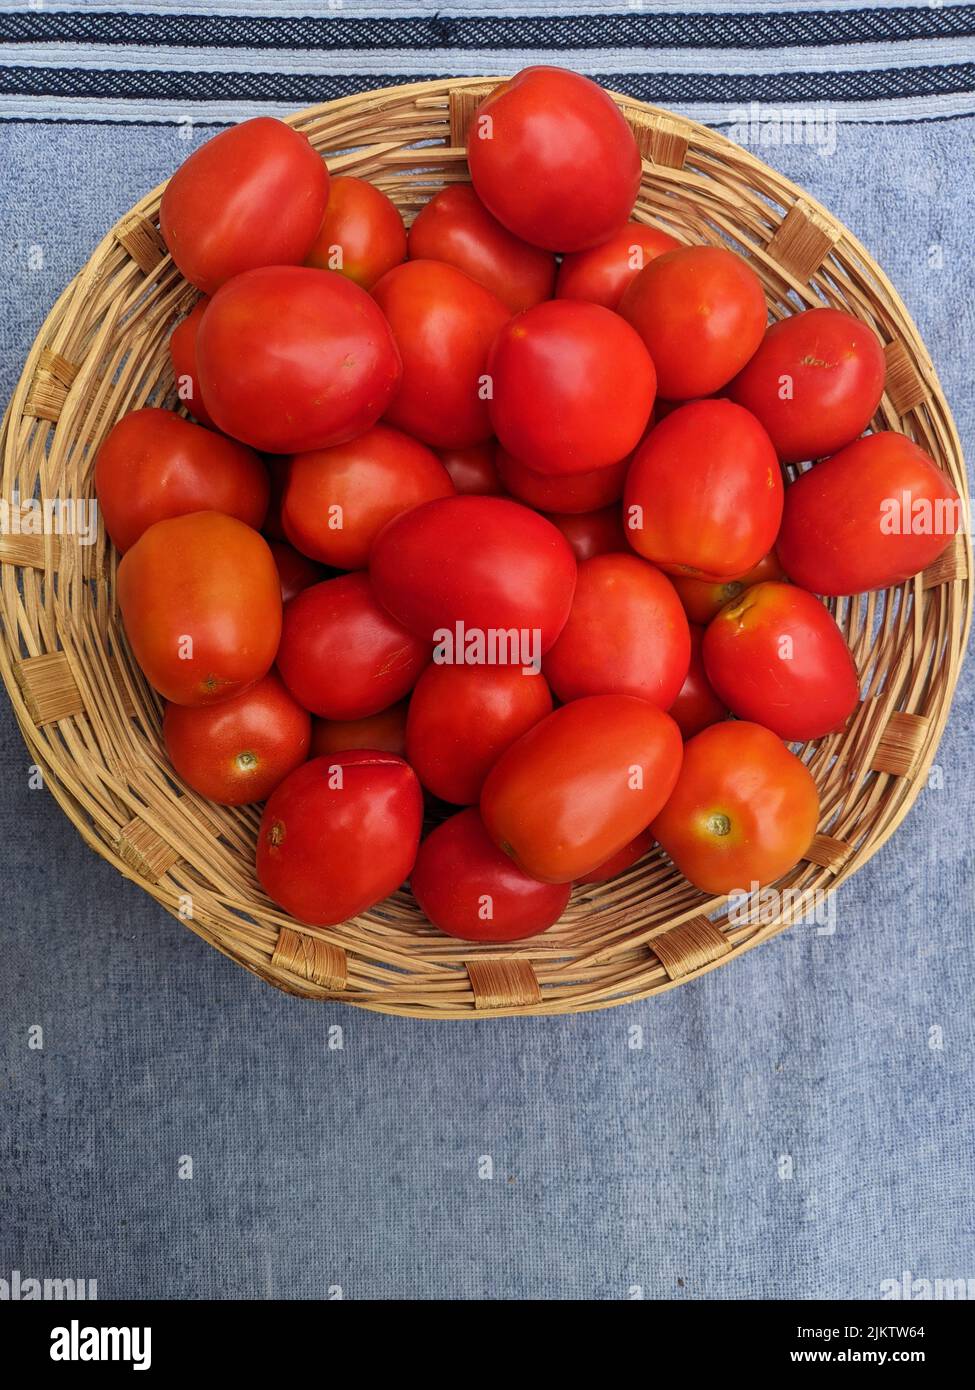 Pomodori freschi rossi maturi in cestino di vimini, pomodoro rosso, pomodoro in cesto di legno, frutta di verdura, pomodoro, cesto, rosso, fresco, f Foto Stock